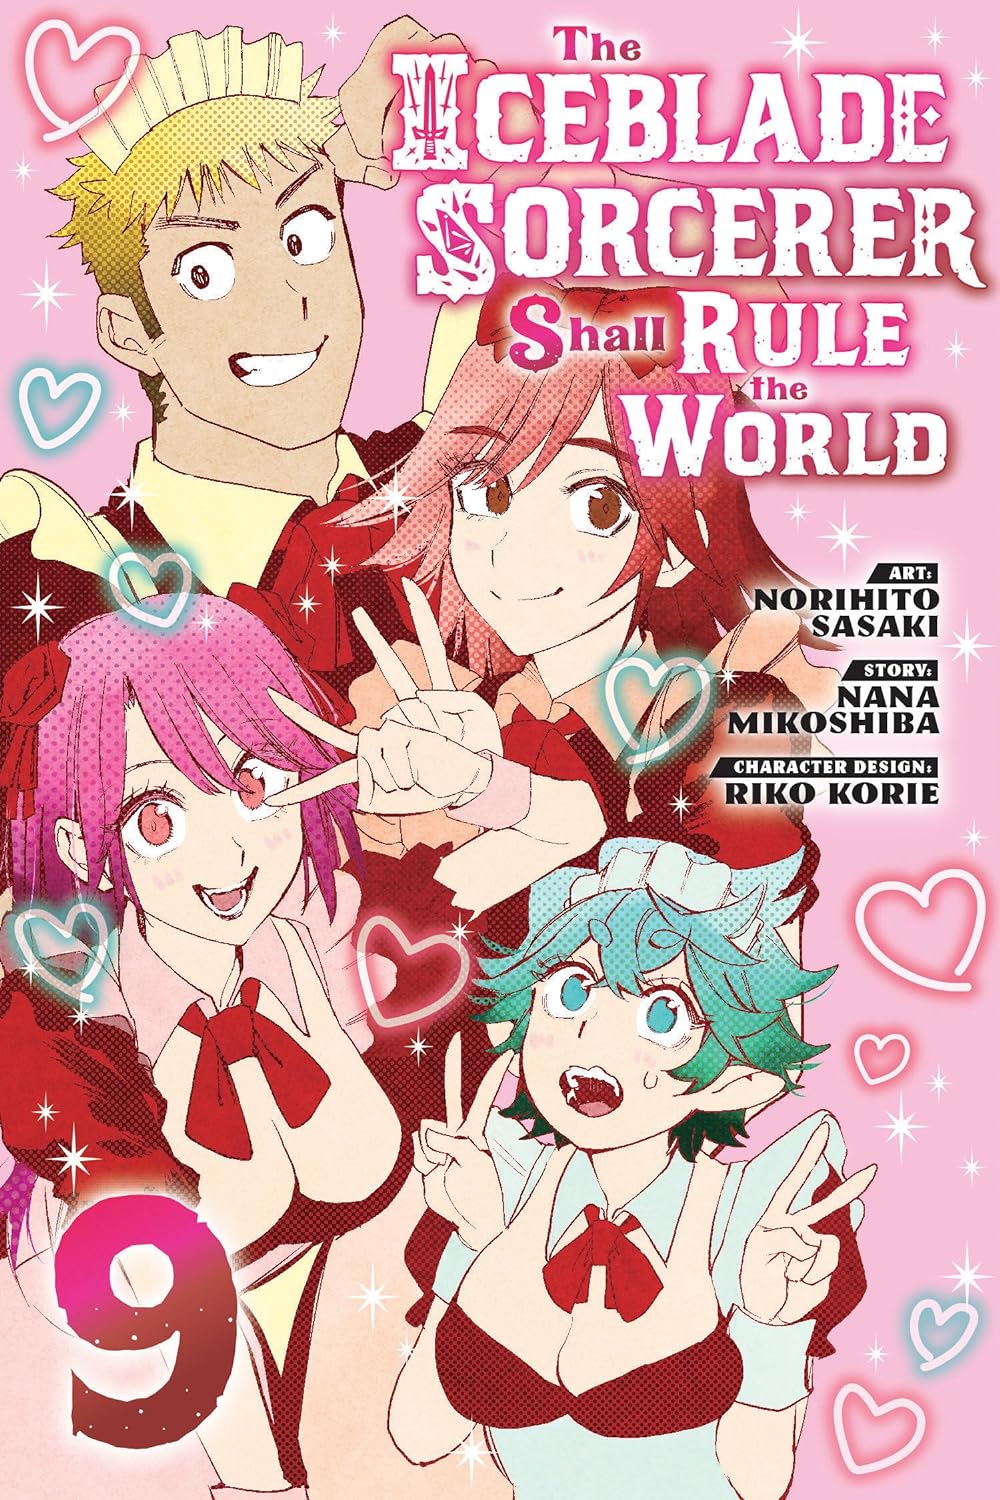 The Iceblade Sorcerer Shall Rule the World (Manga) Vol. 09